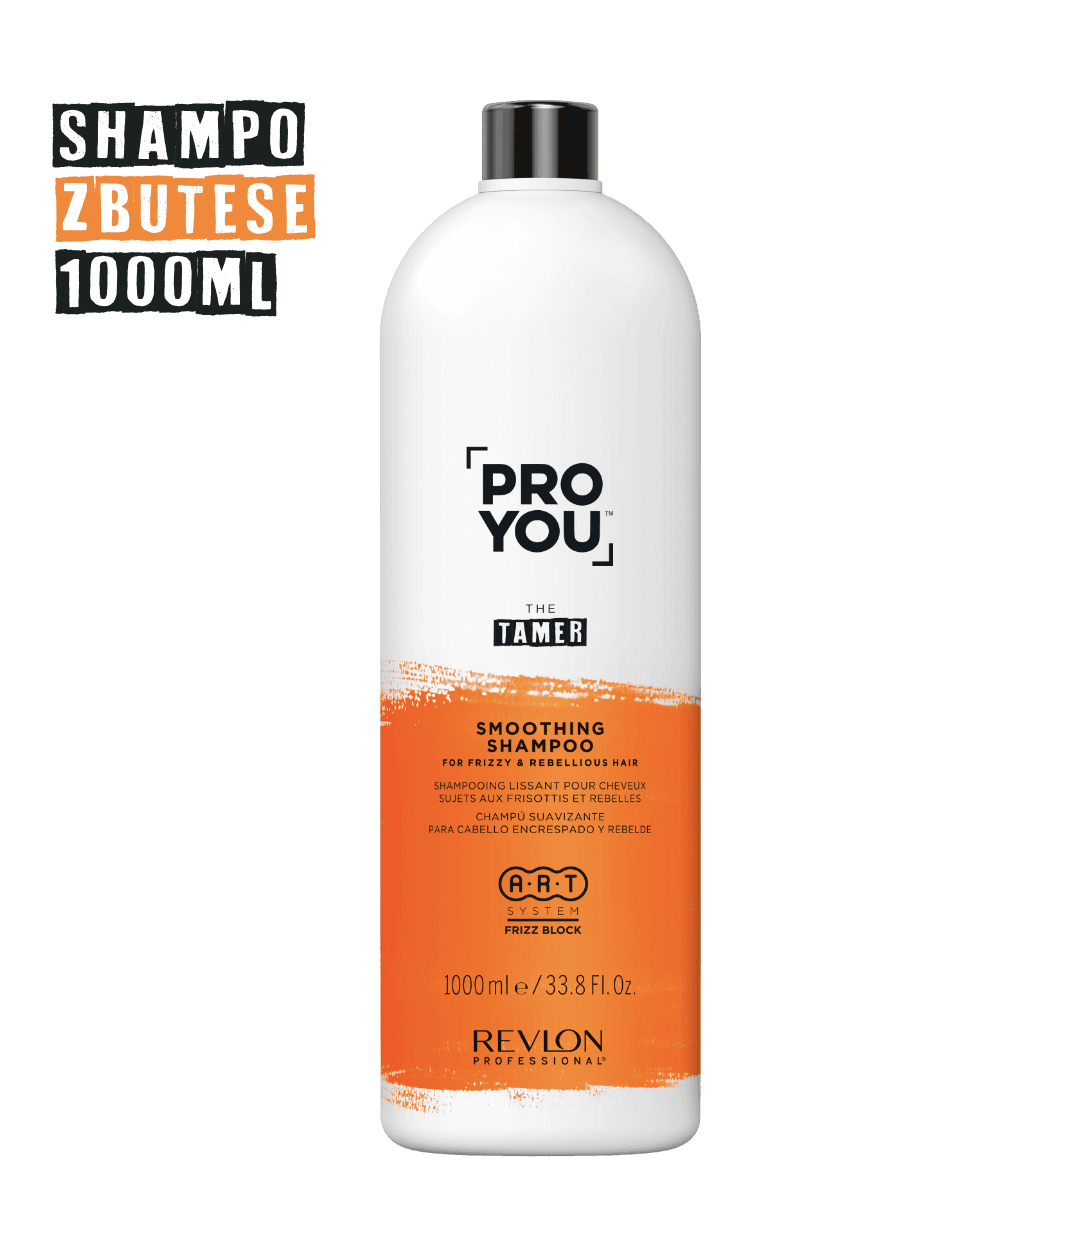 Proyou Tamer Smoothing Shampoo - Sagema